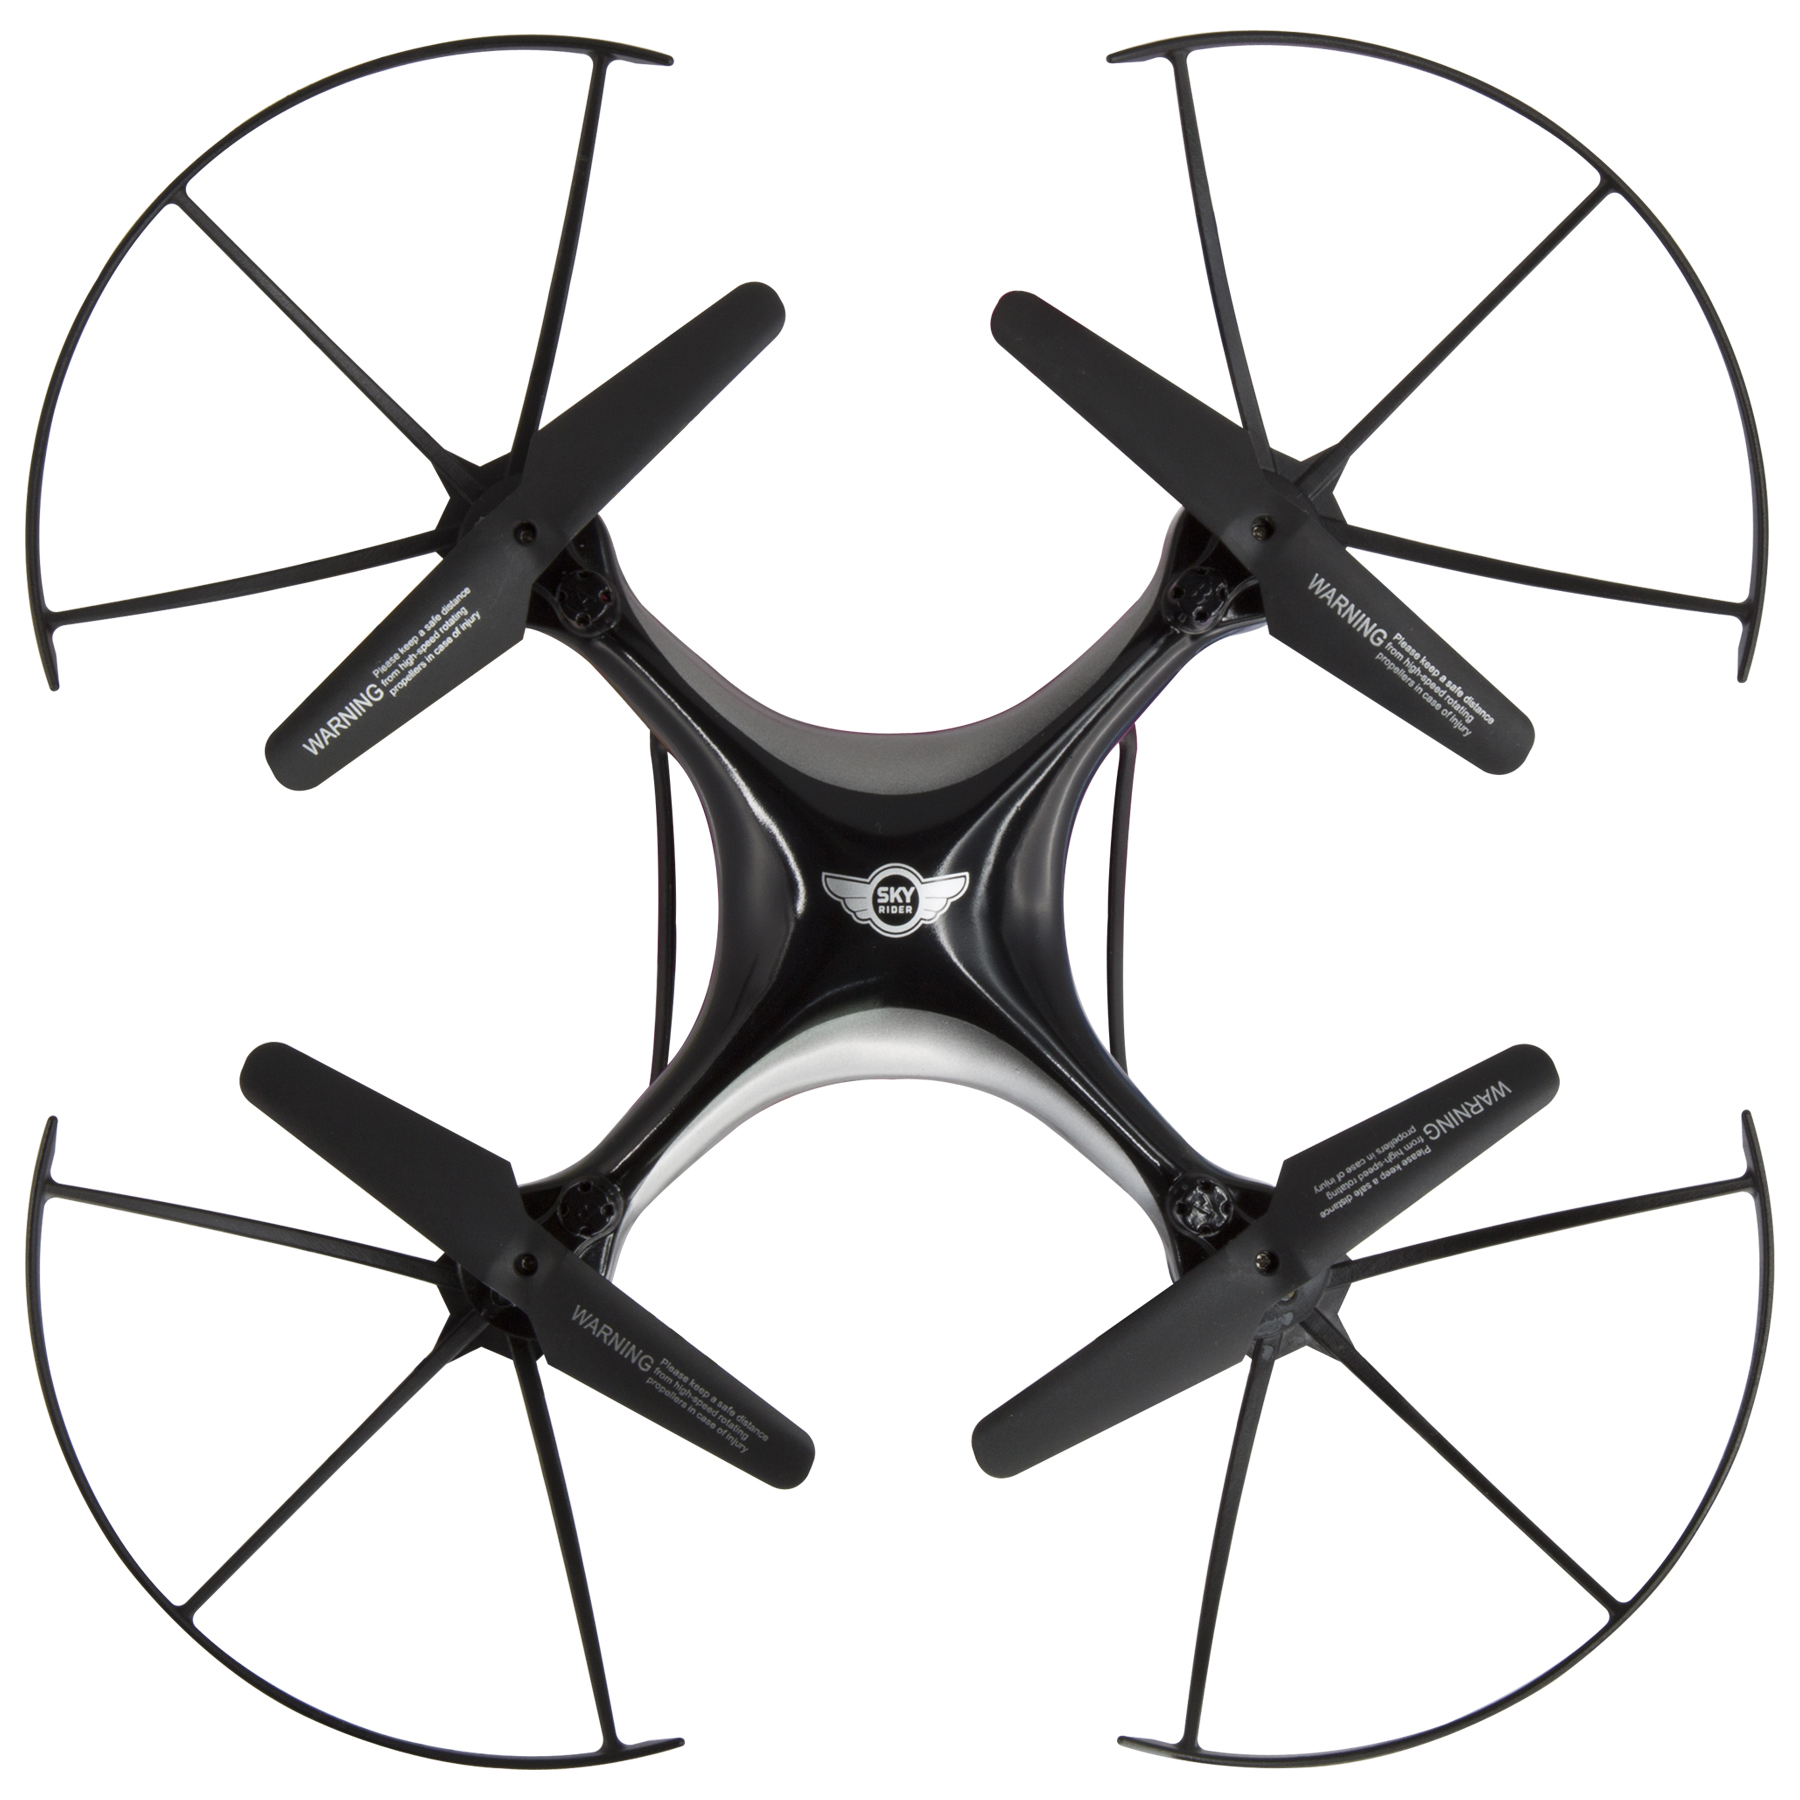 Sky Rider Thunderbird Quadcopter Drone with Wi-Fi Camera, DRW389, Black - image 4 of 5